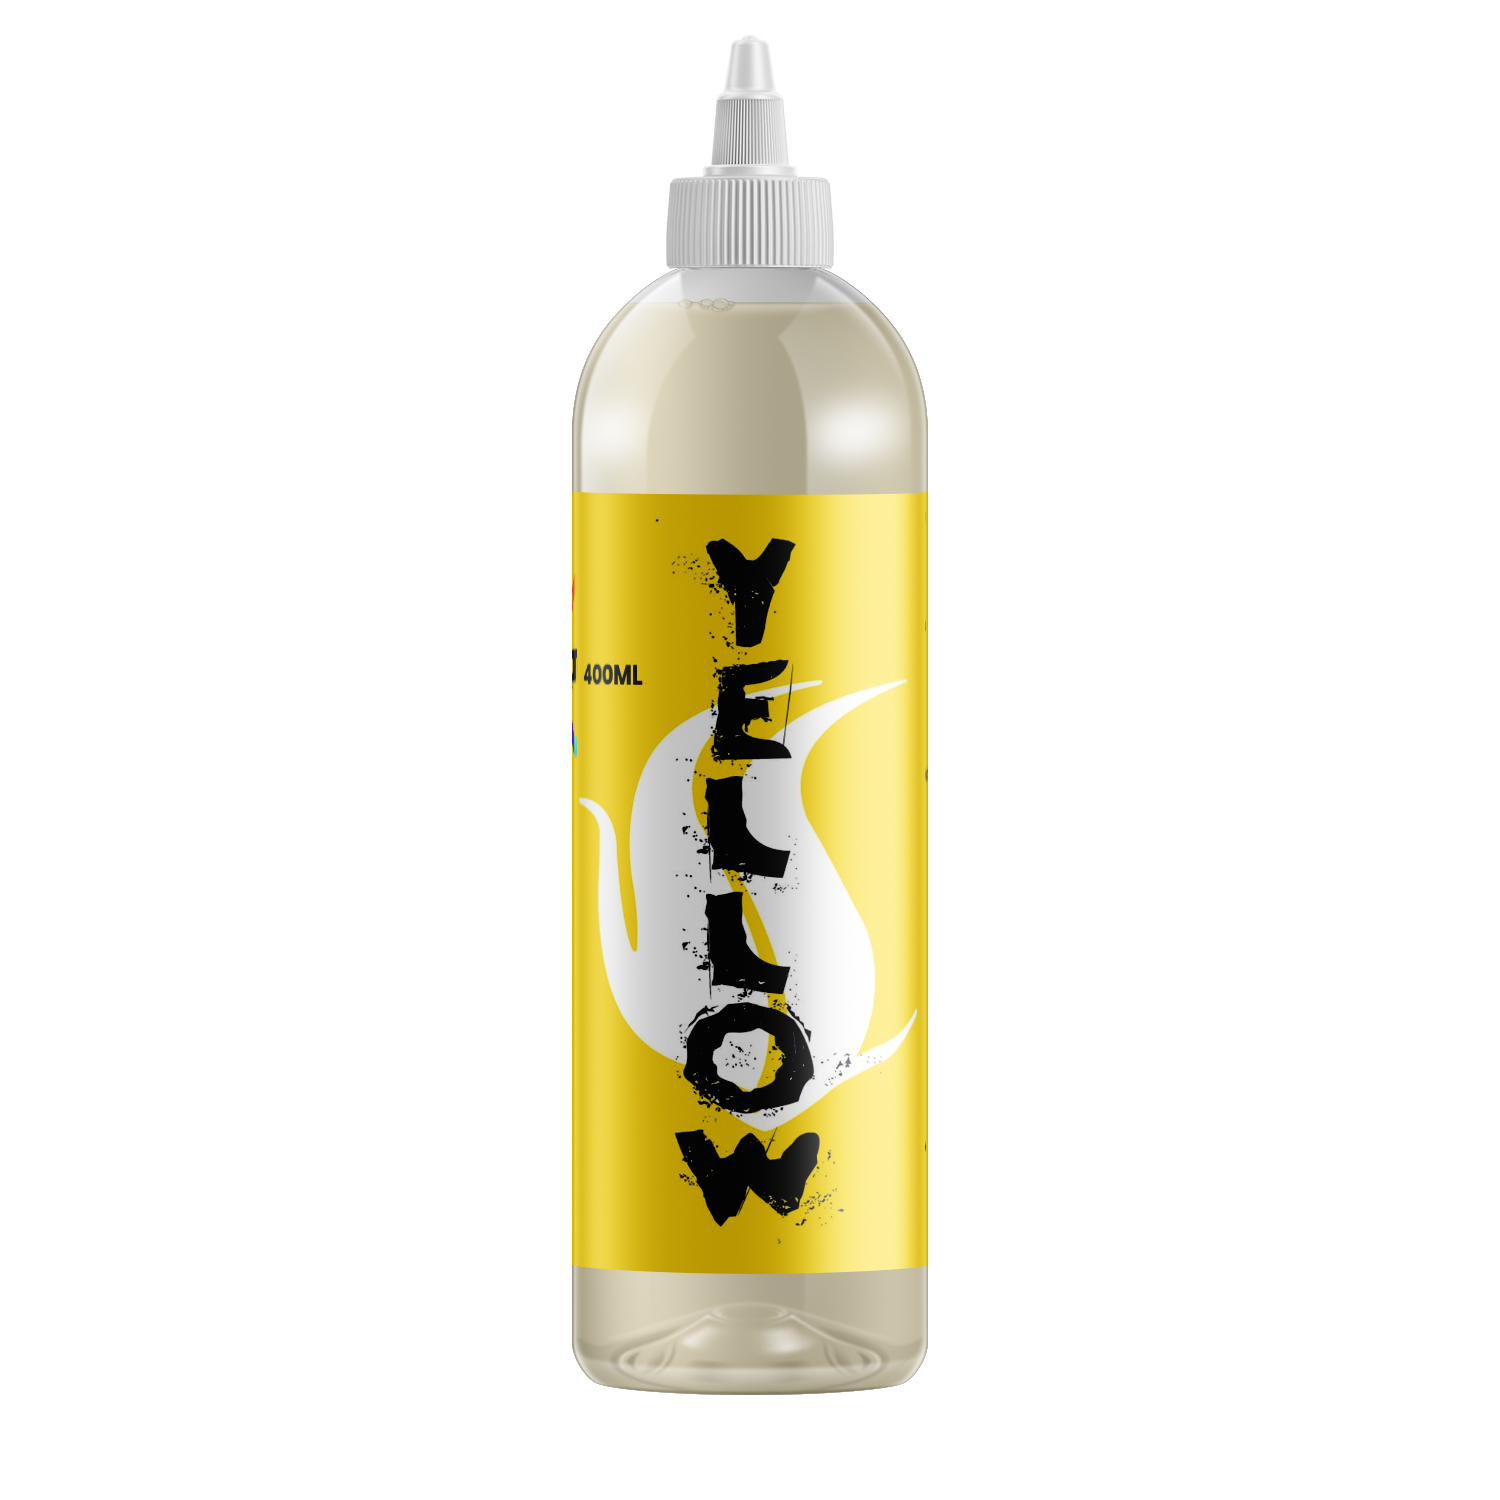 Yellow Shortfill 400ml by VL Max